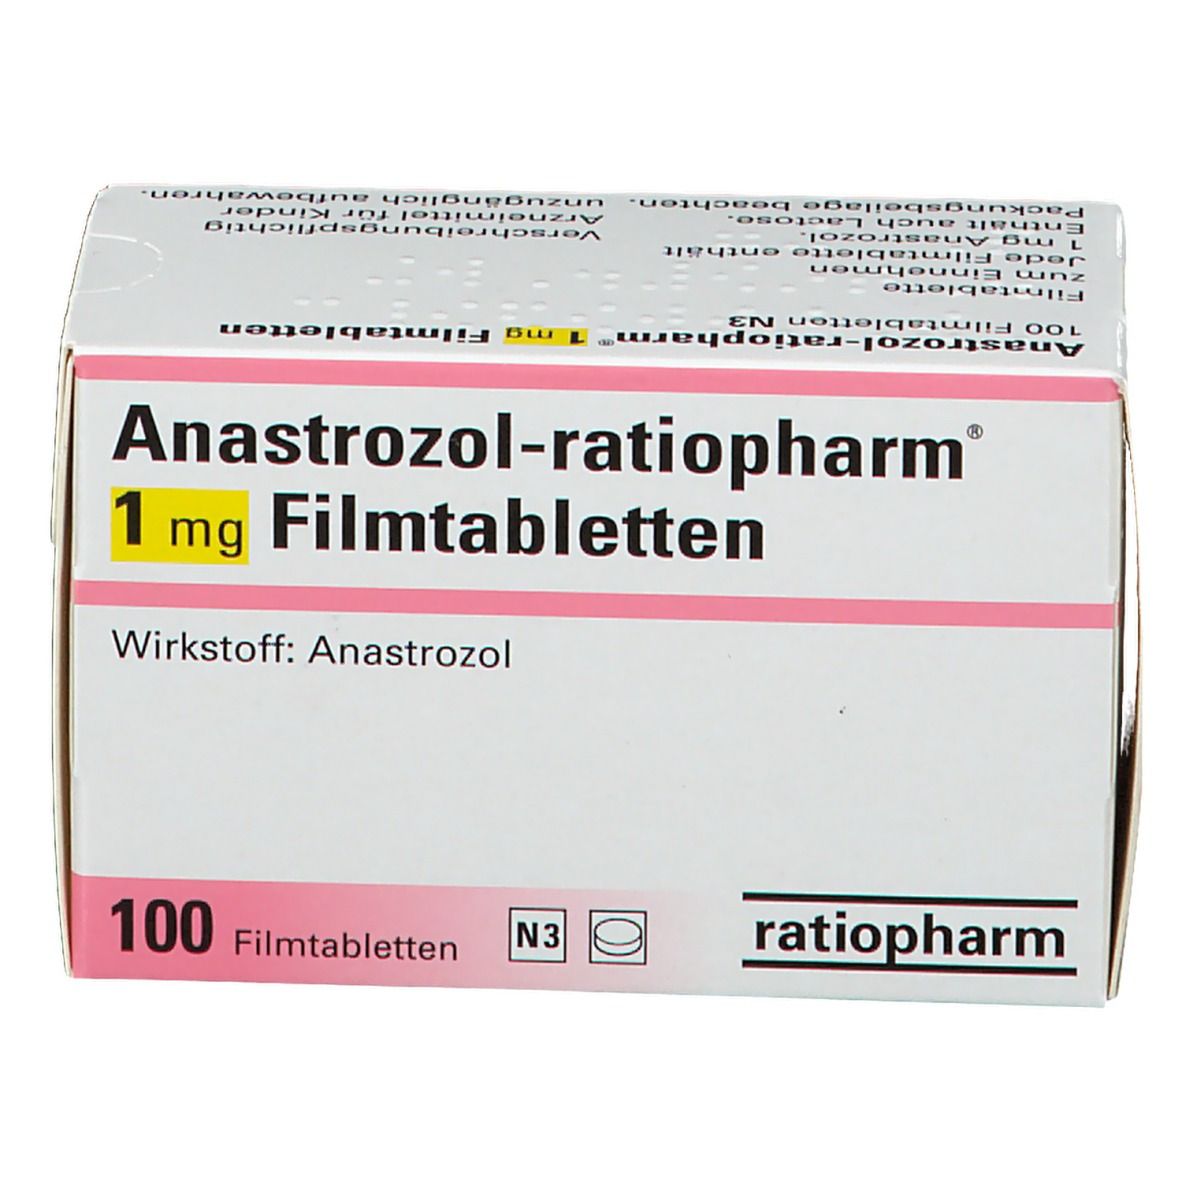 Anastrozol-ratiopharm® 1 mg